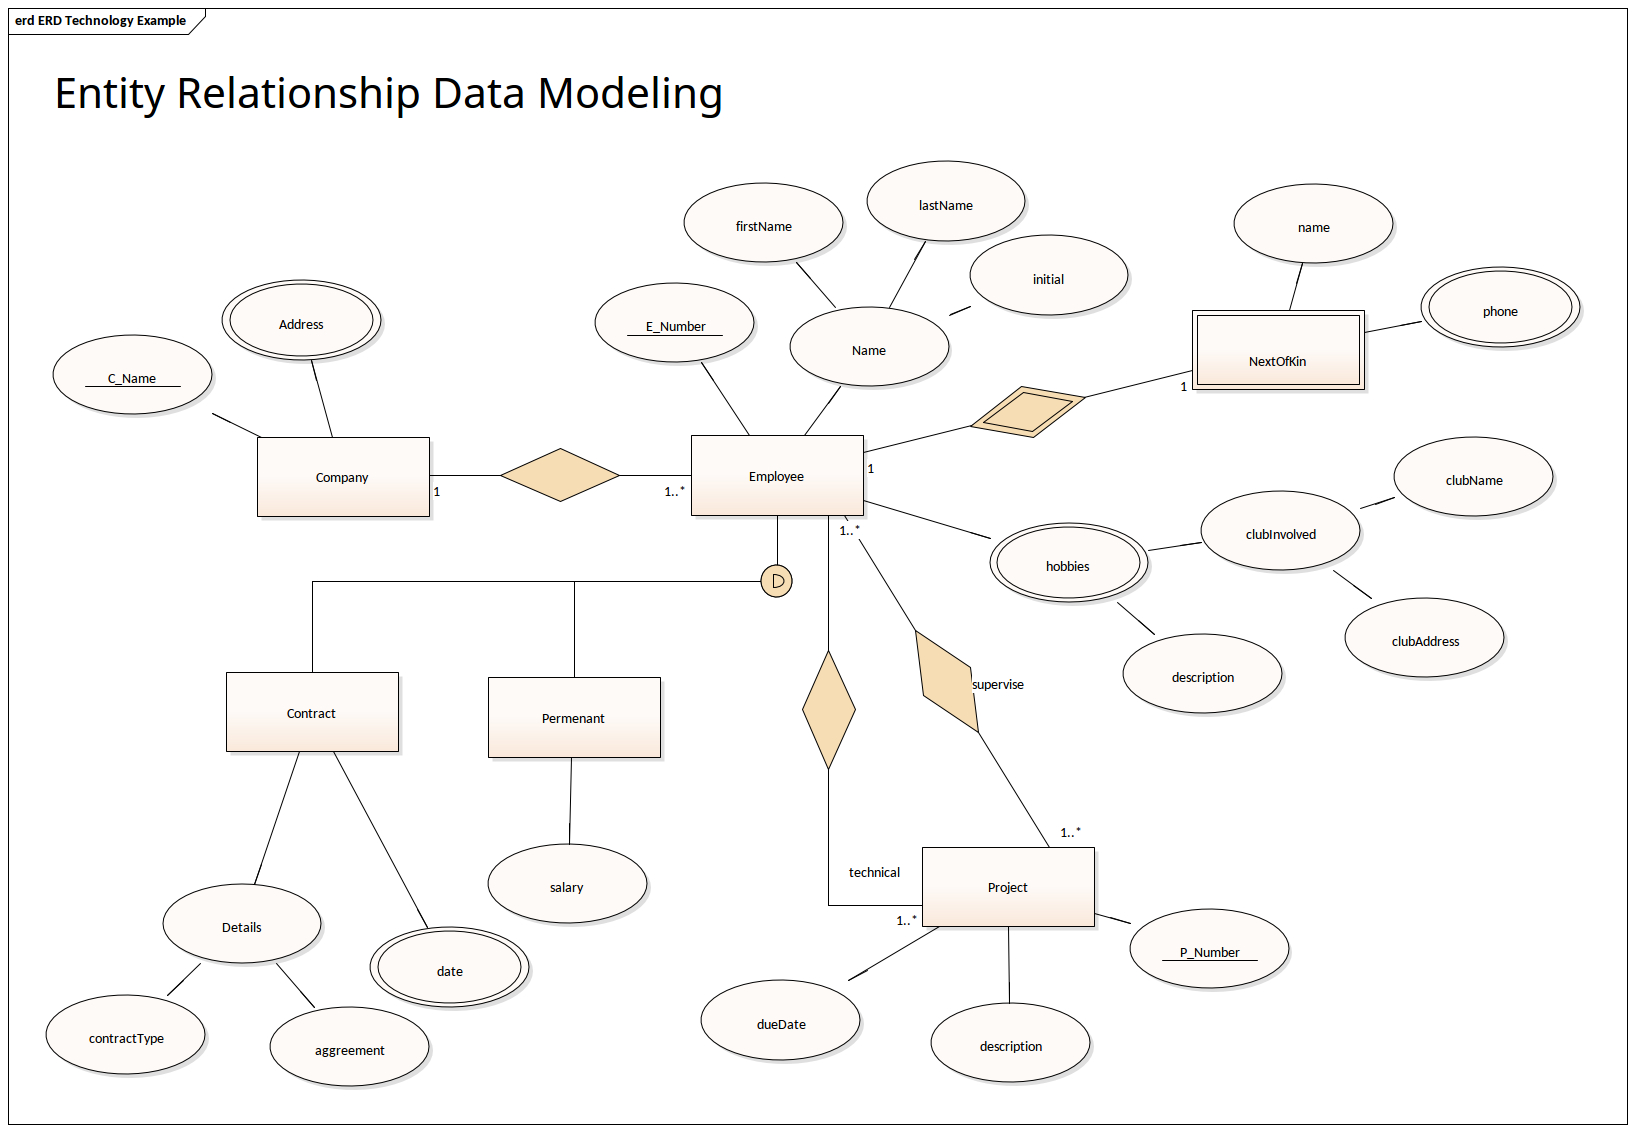 Entity Relationship Data Modeling | Enterprise Architect intended for The Entity Relationship Diagram